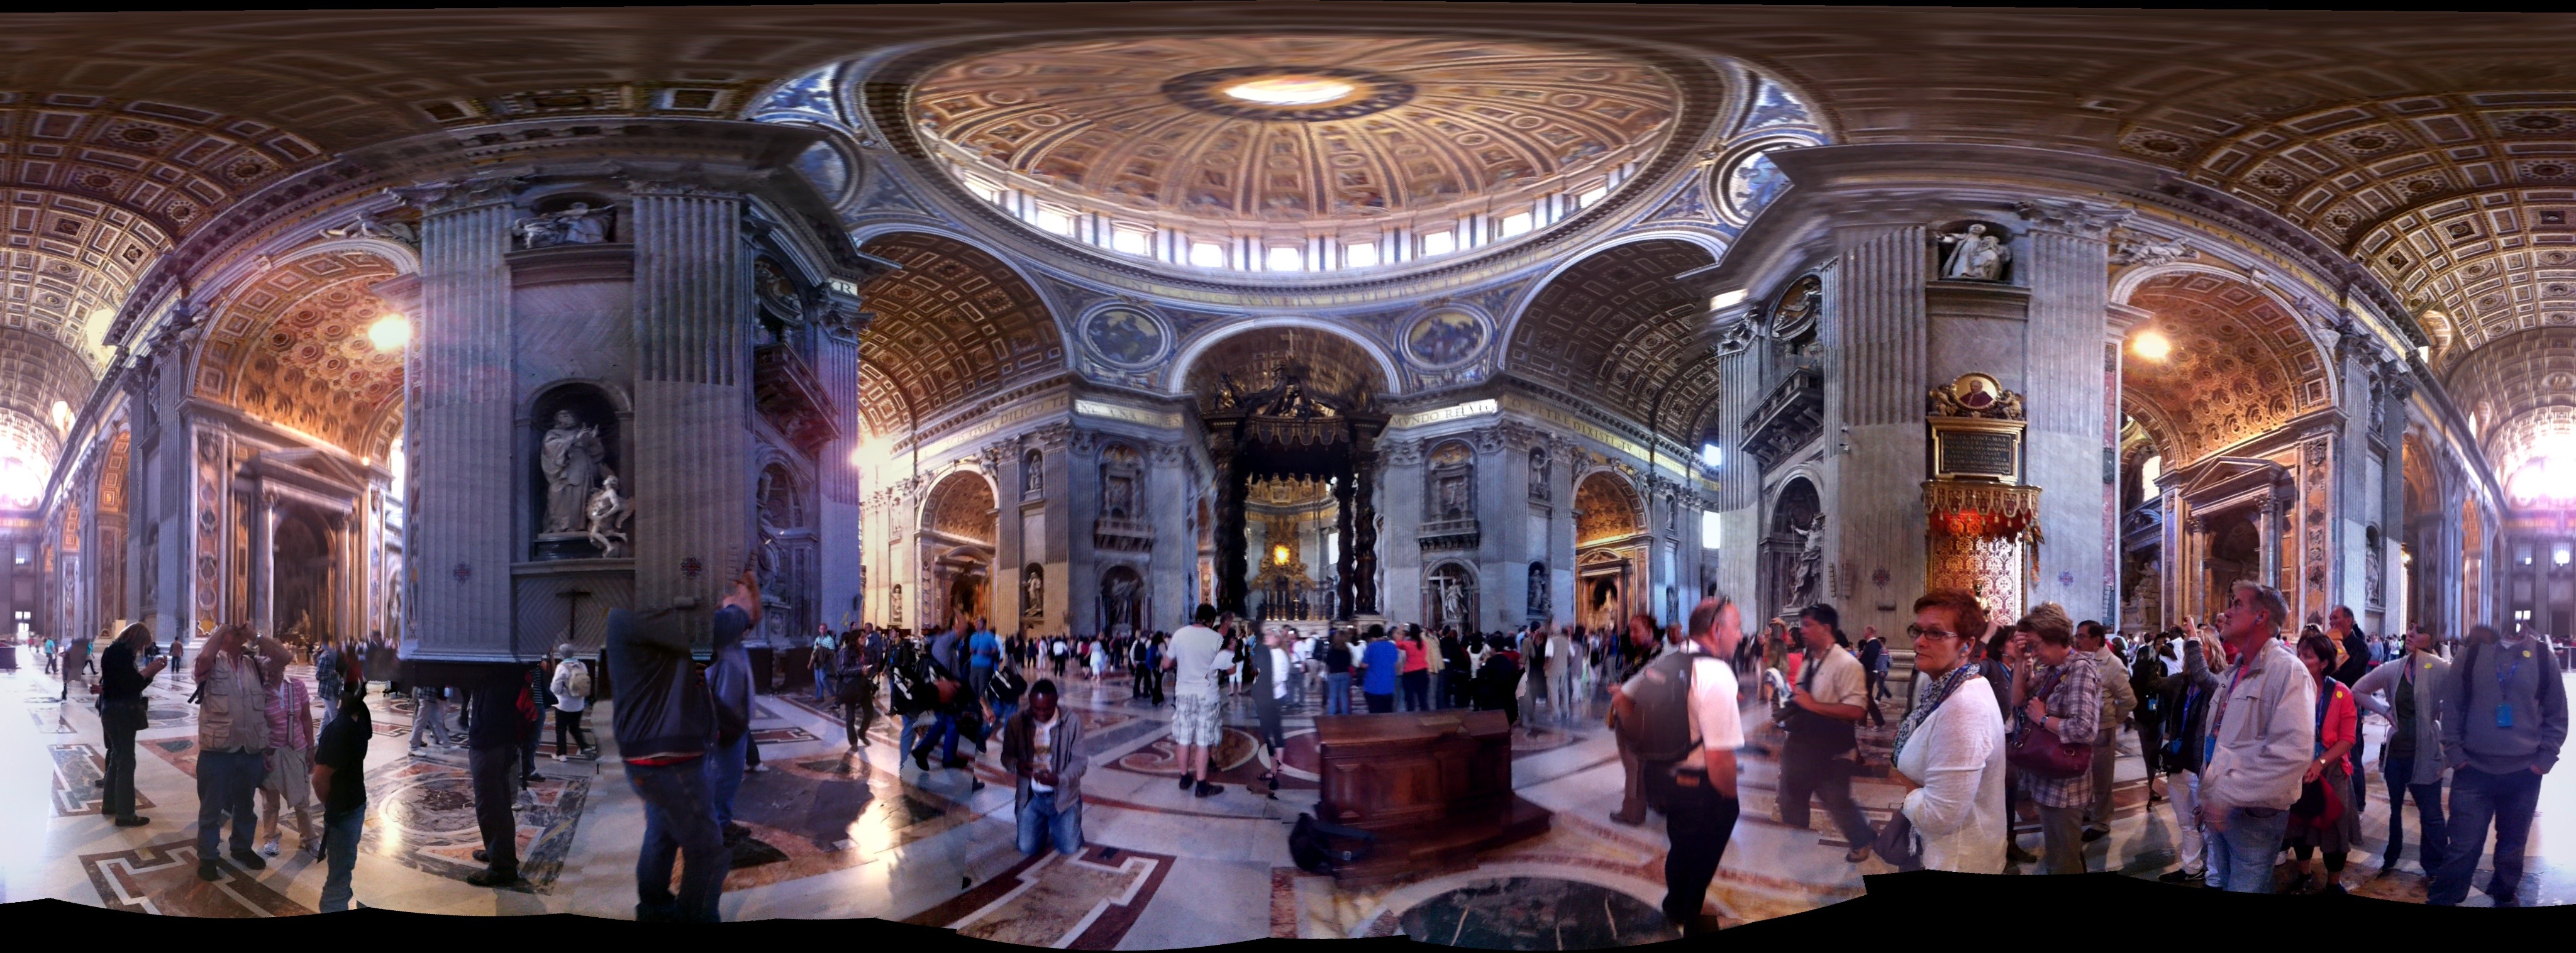 Flattened Panorama of St Peter's Basilica